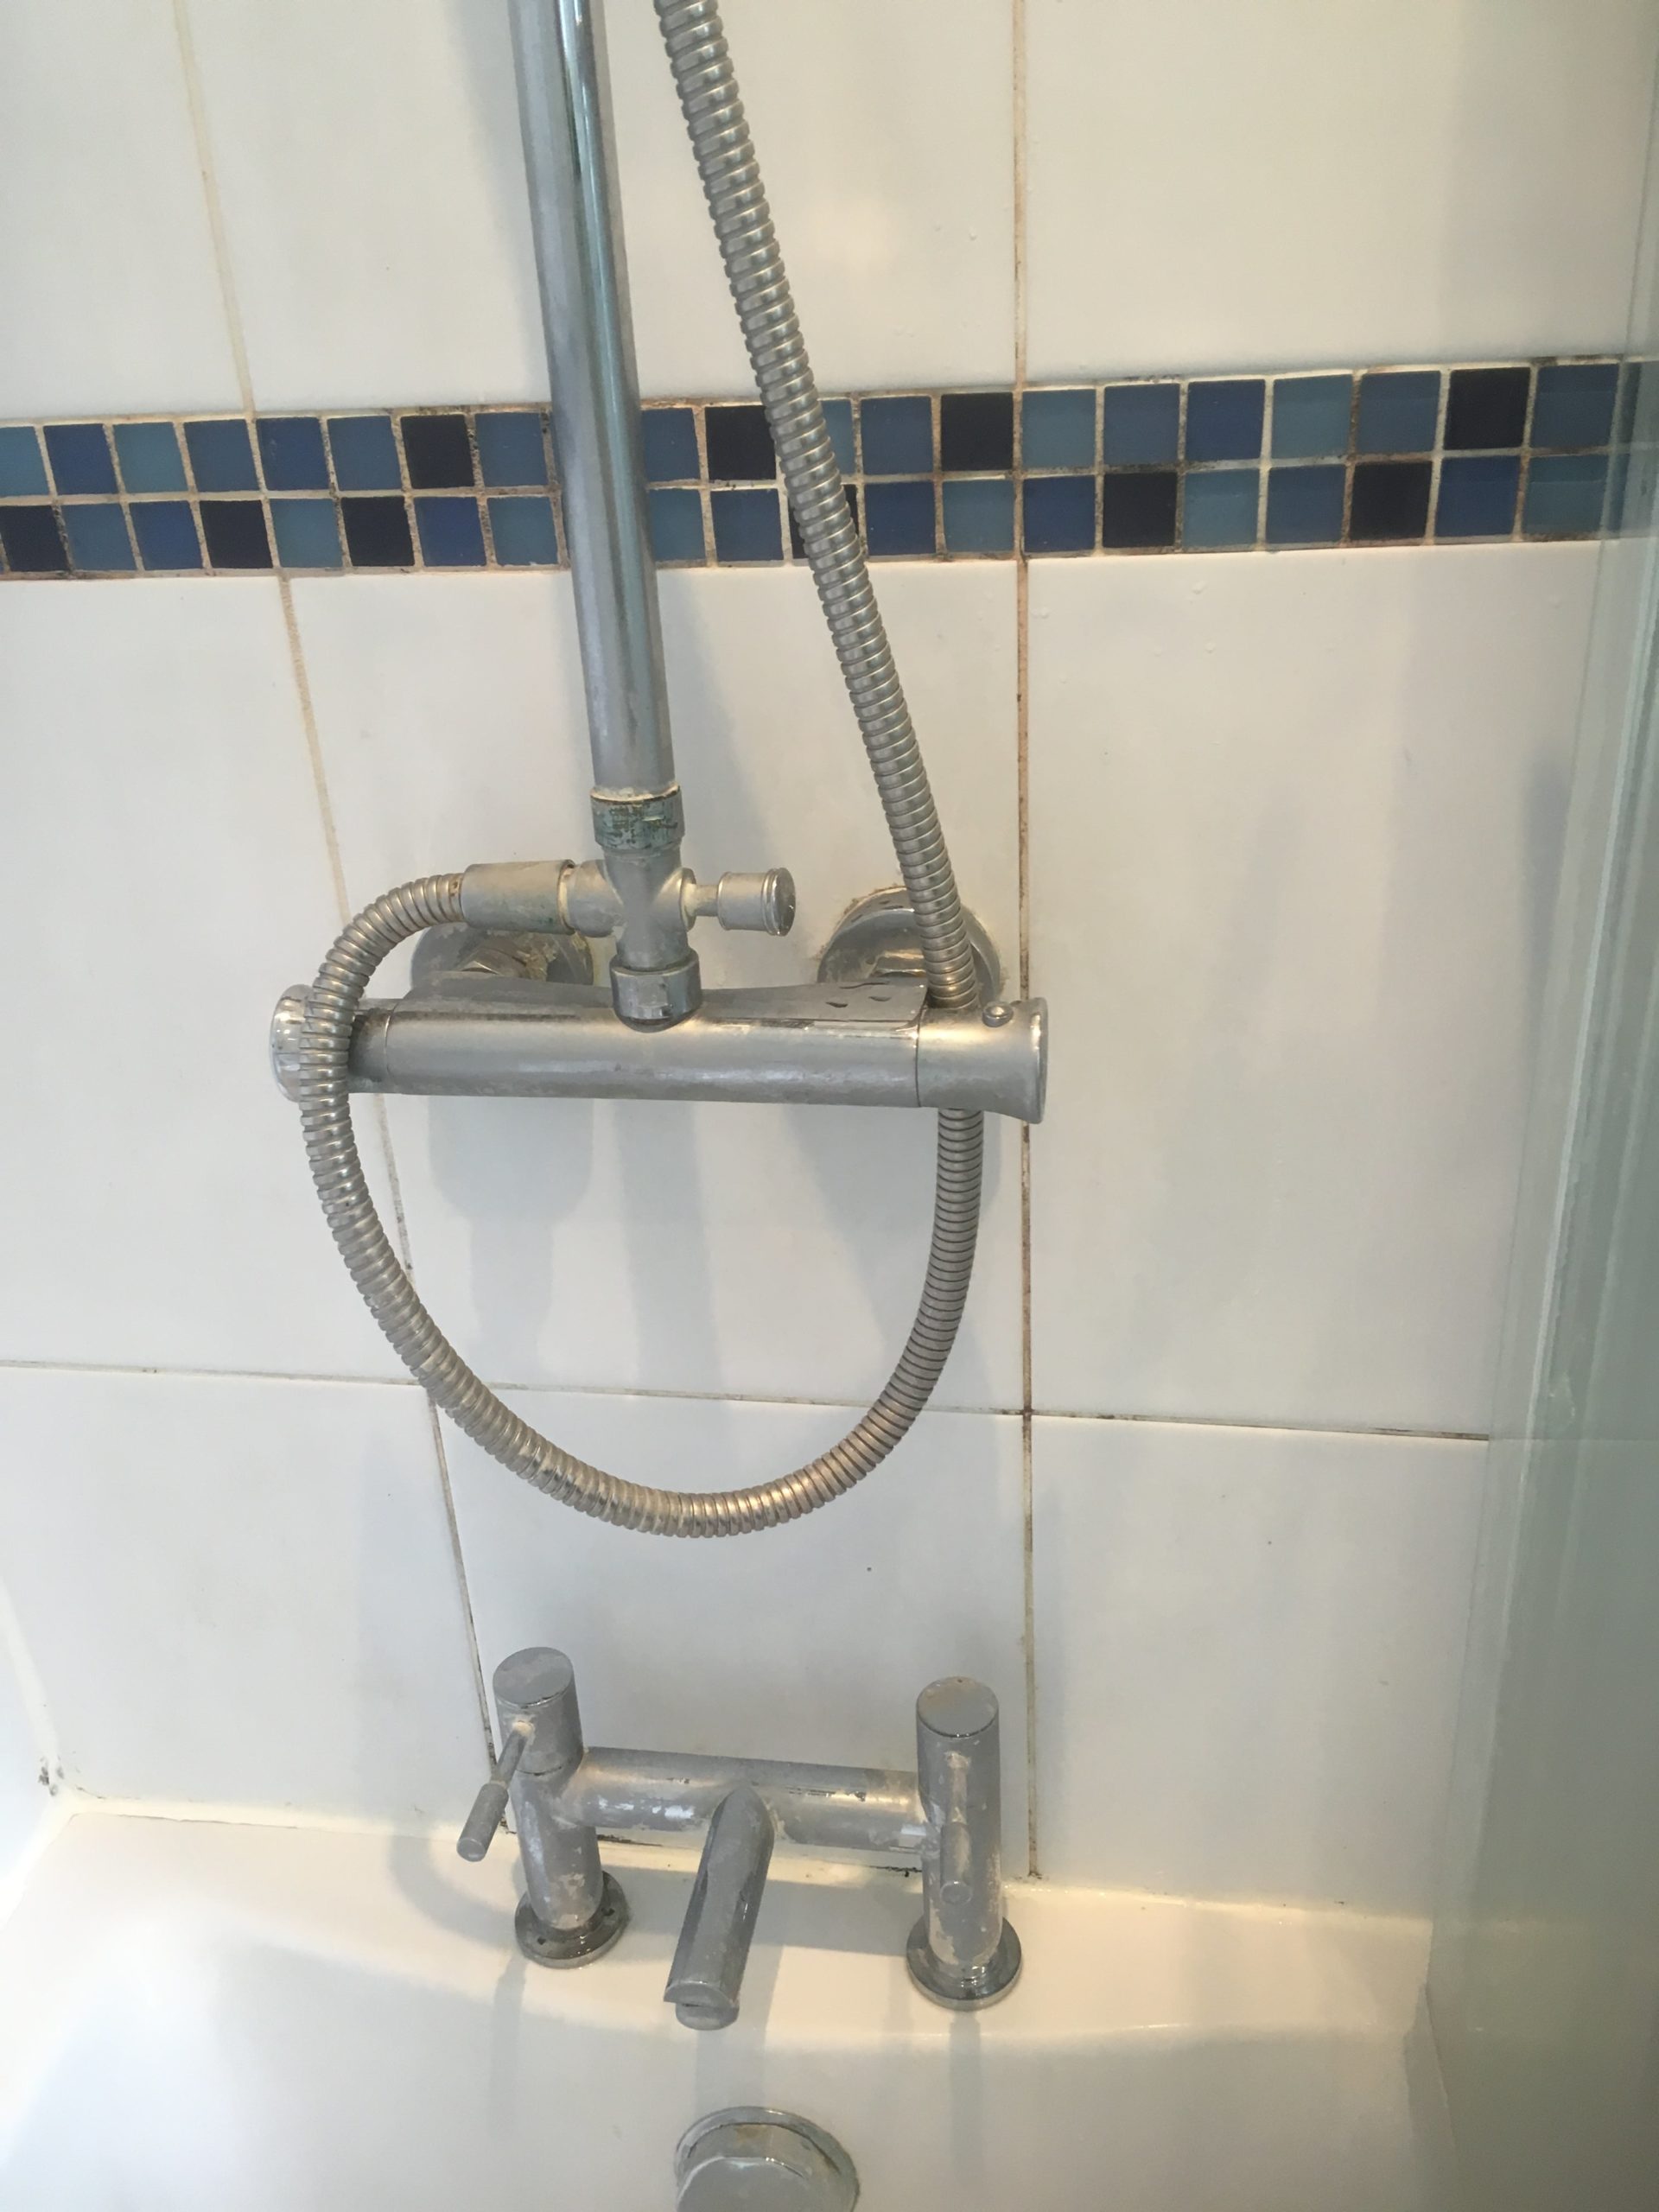 Bathroom Shower Tile Before Cleaning Handforth